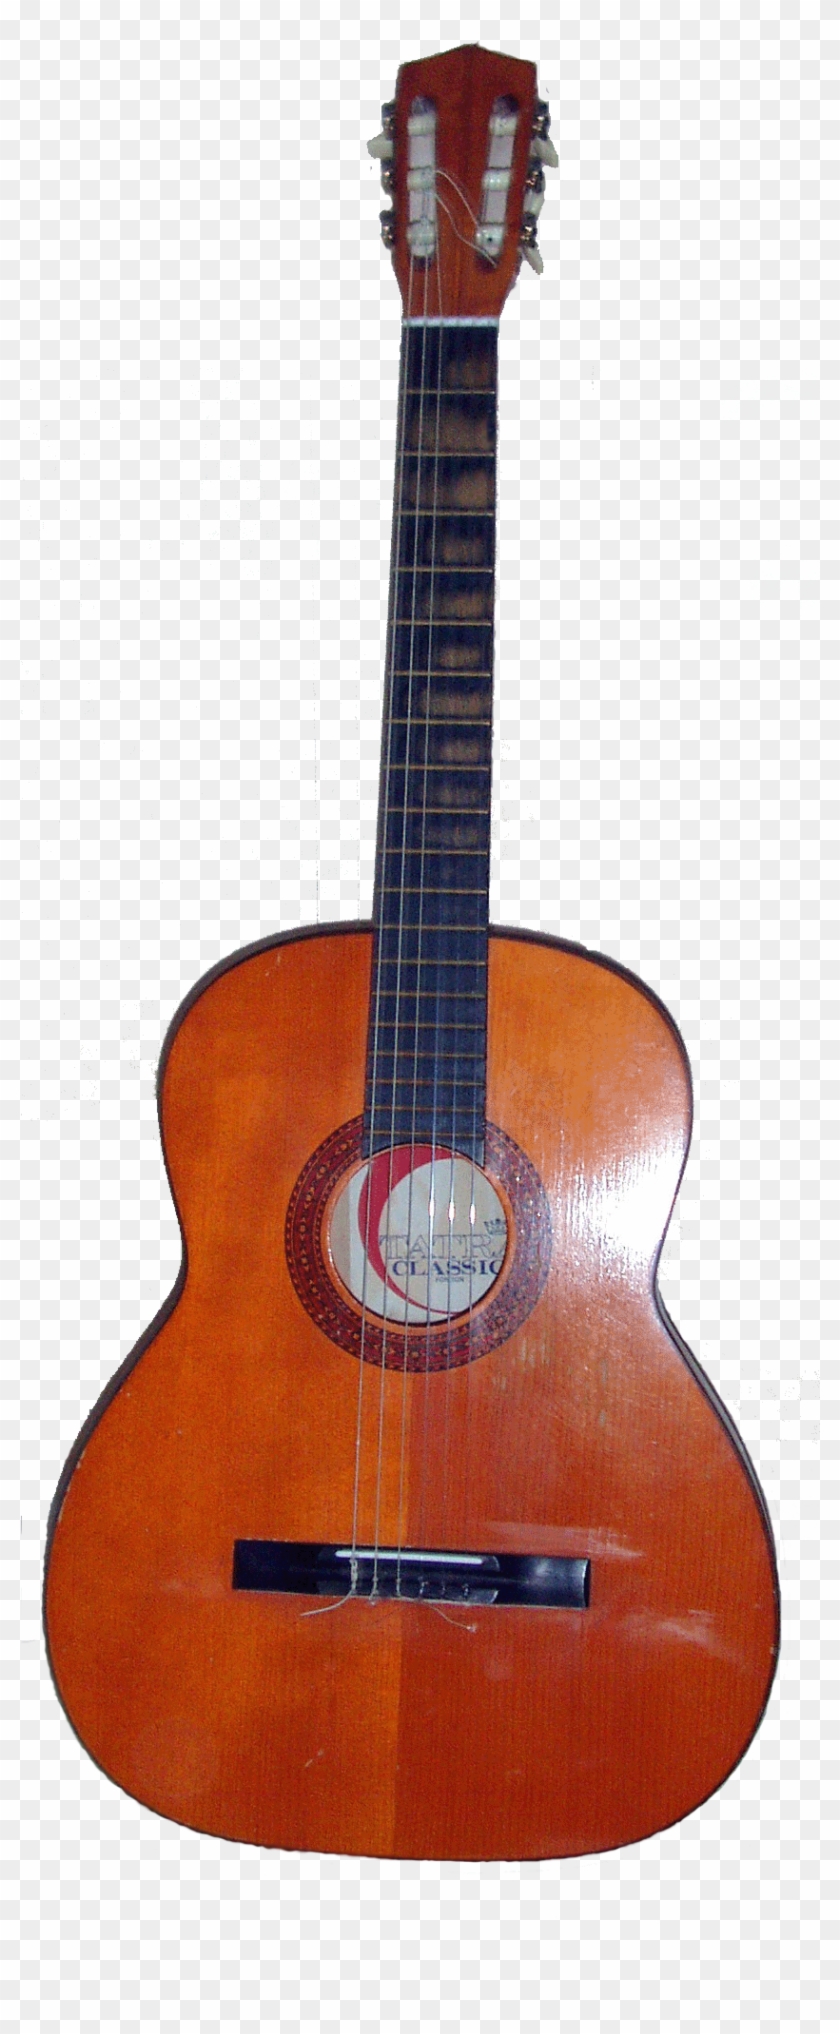 Spanish Classical Acoustic Guitar3 - Spanish Acoustic Guitar Clipart #1615122